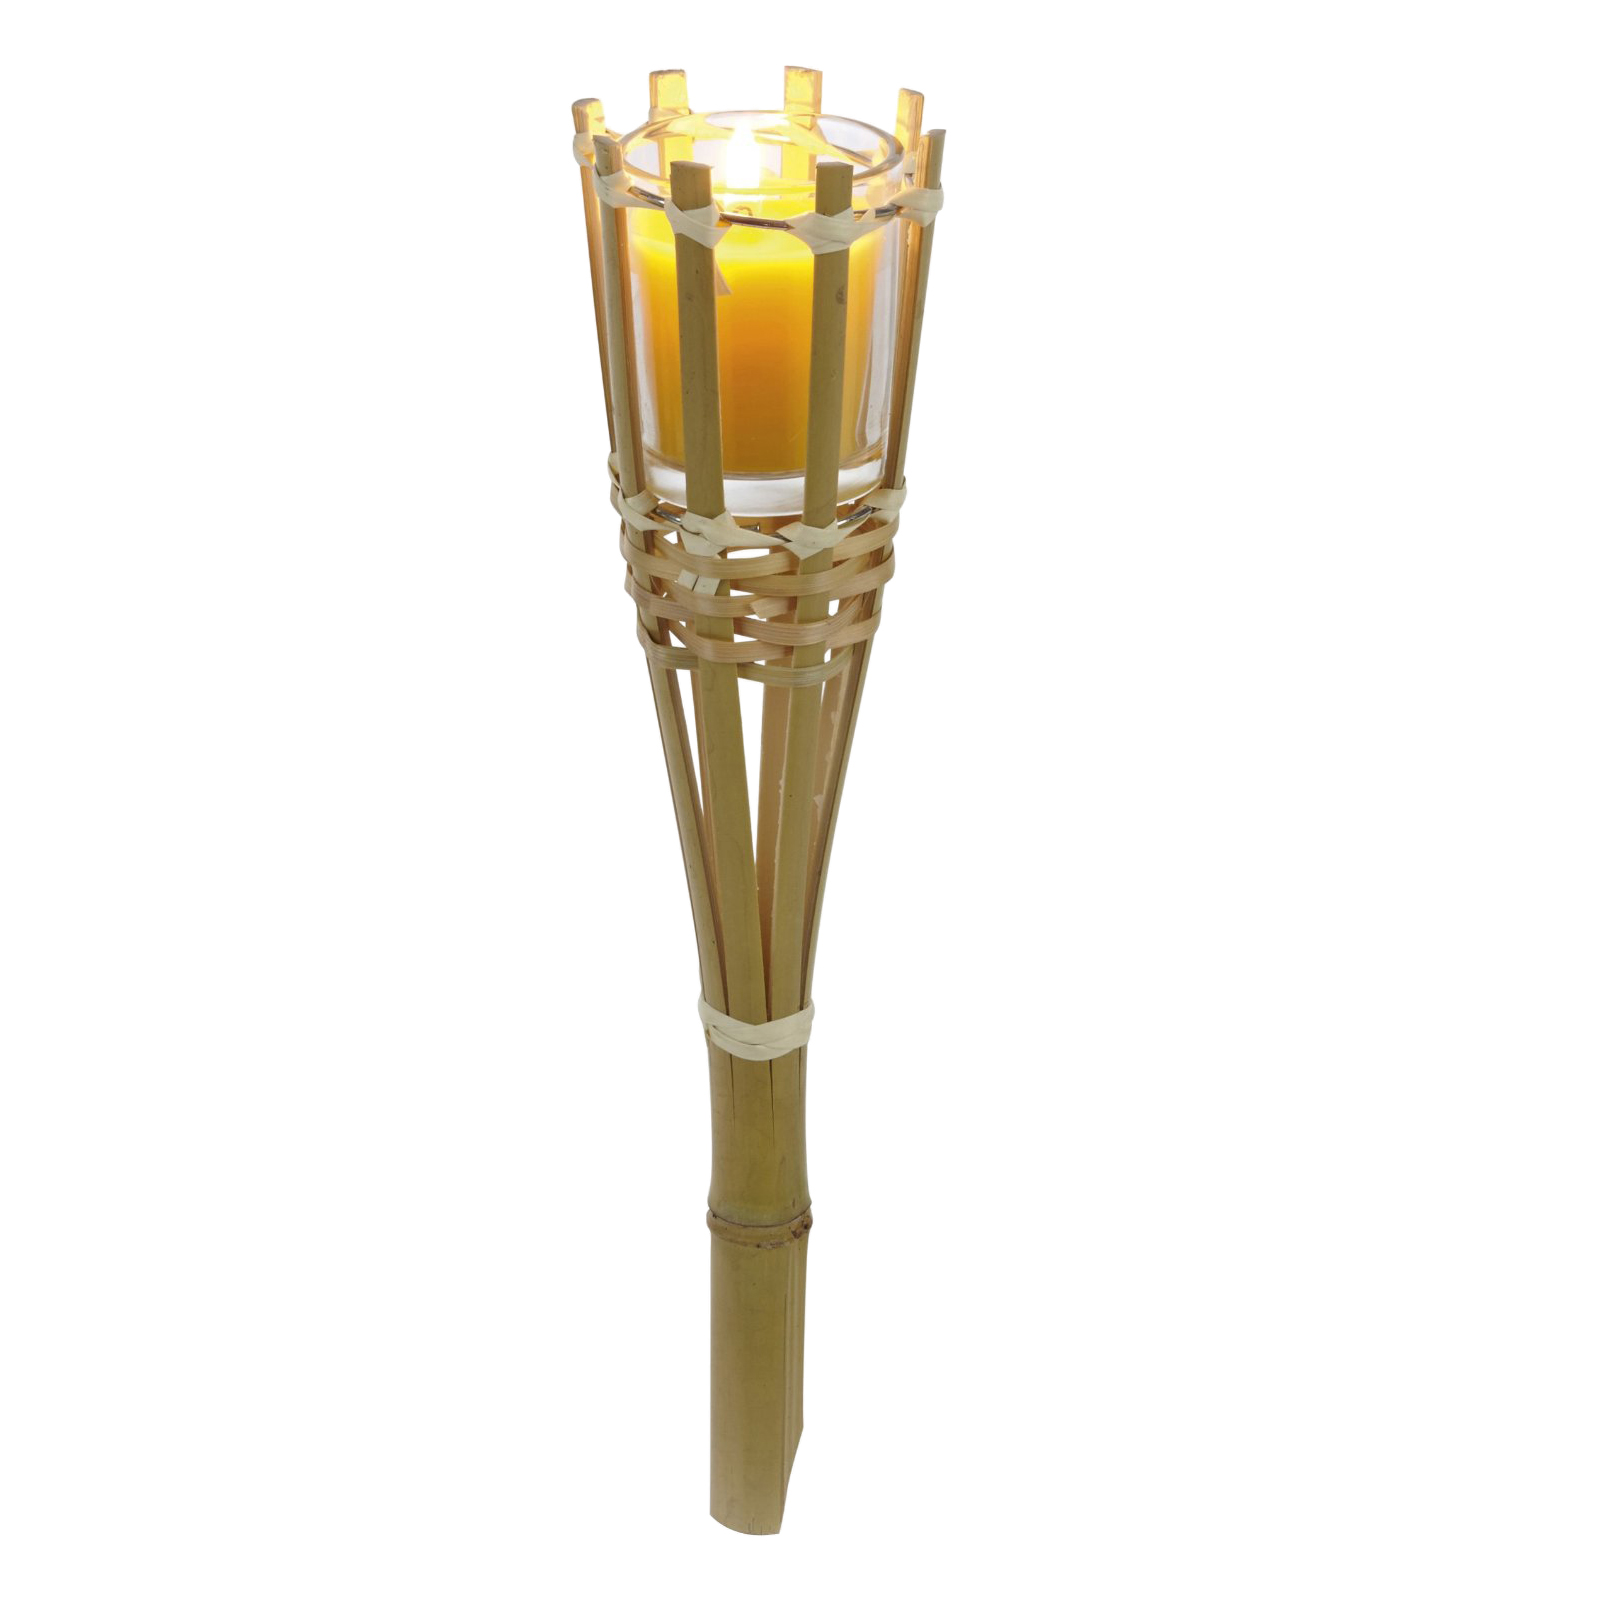 Bamboo garden torch